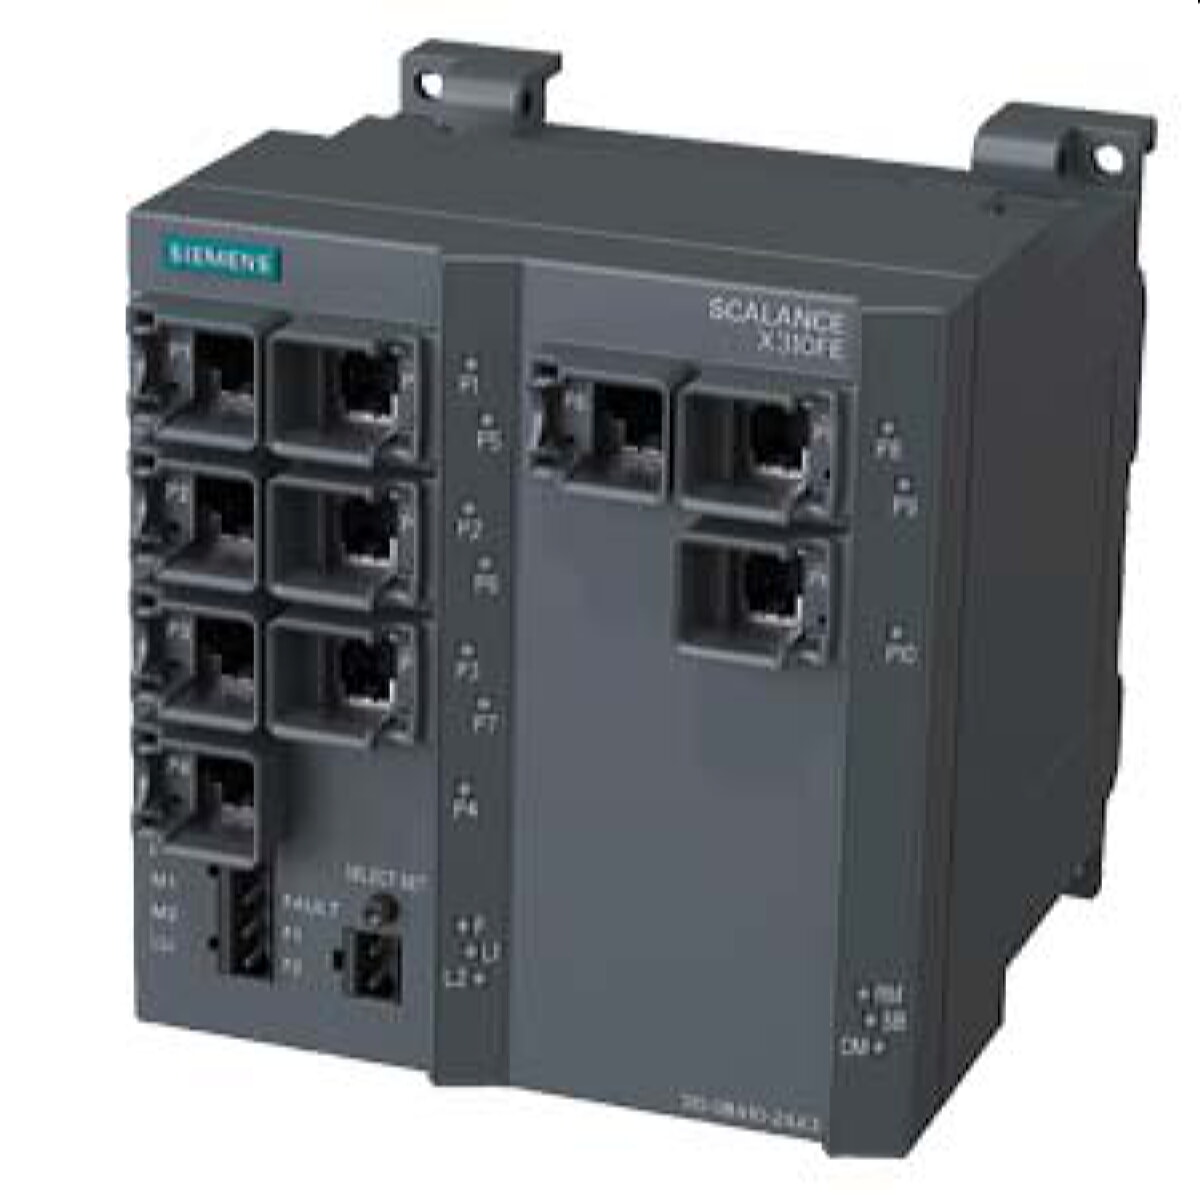 Siemens Switch SCALANCE X310FE 6GK5310-0BA10-2AA3